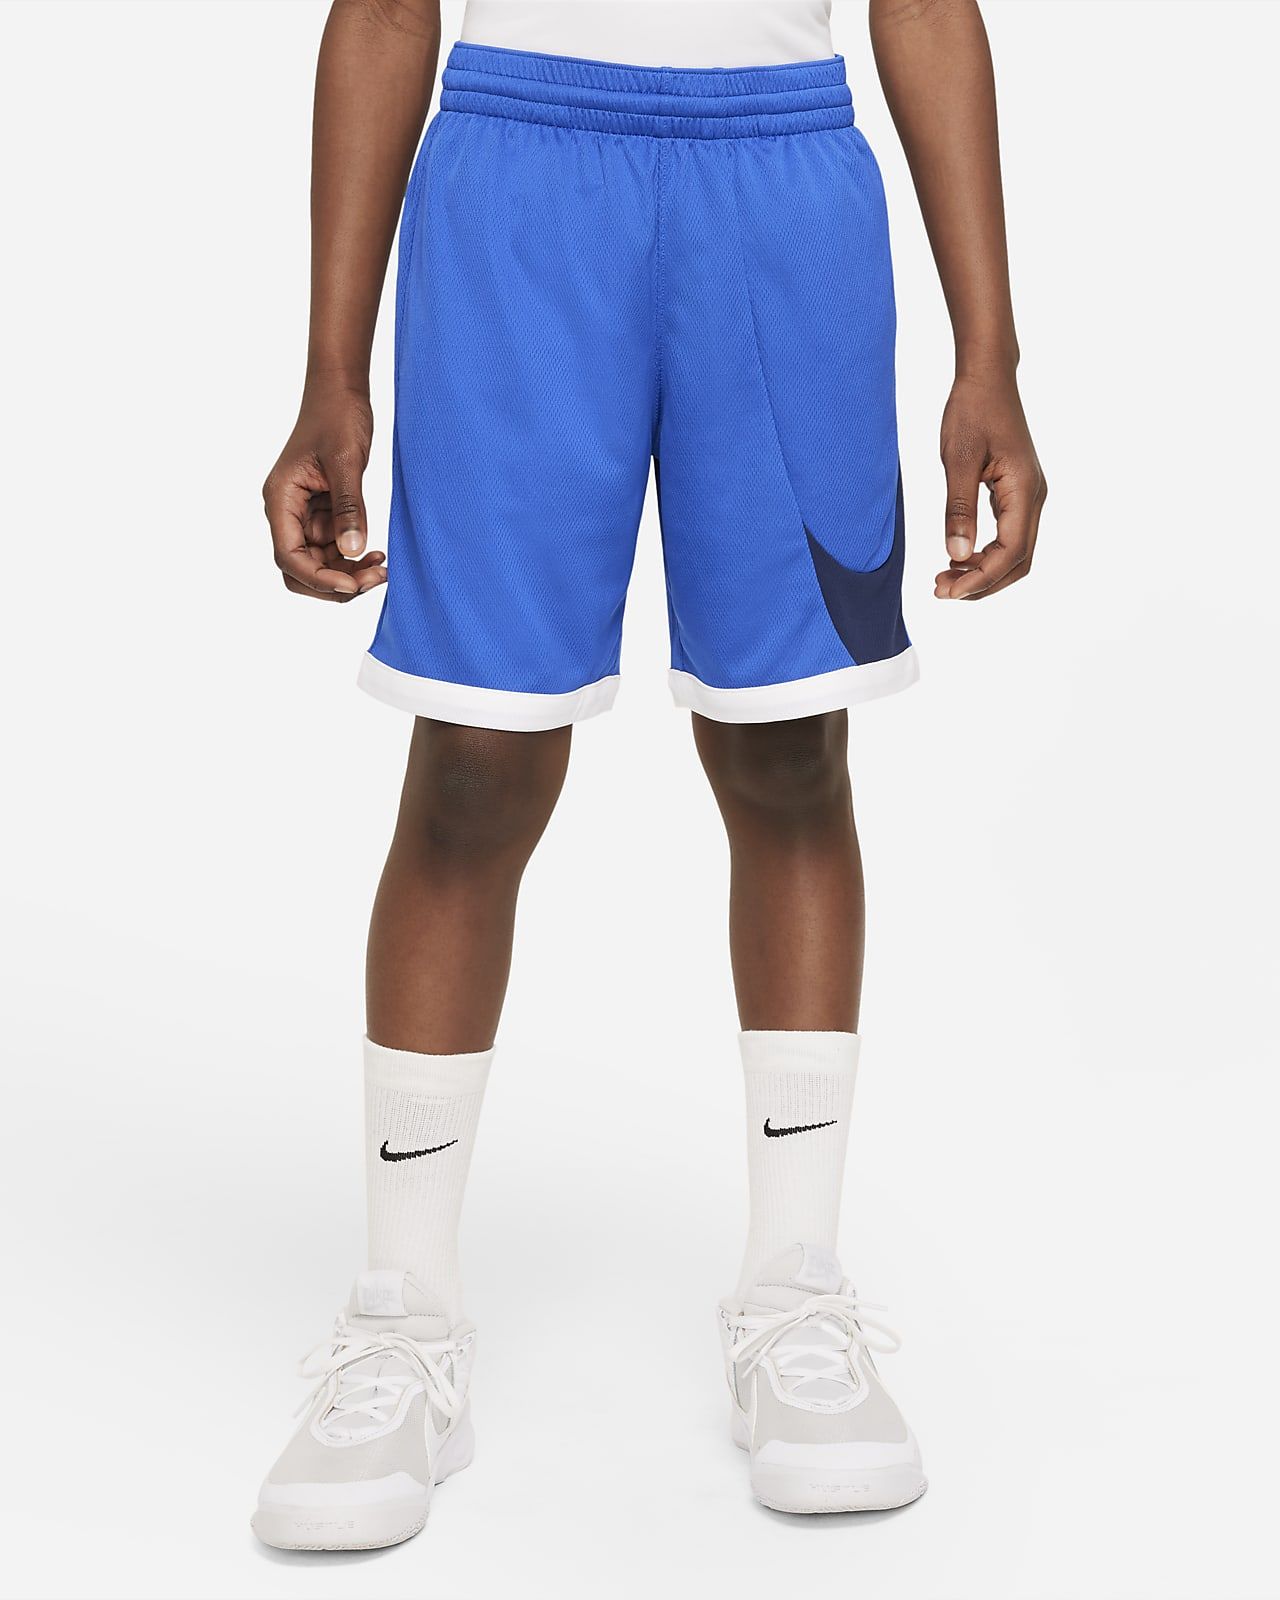 Nike Dri-FIT Big Kids' (Boys') Basketball Shorts. Nike.com | Nike (US)